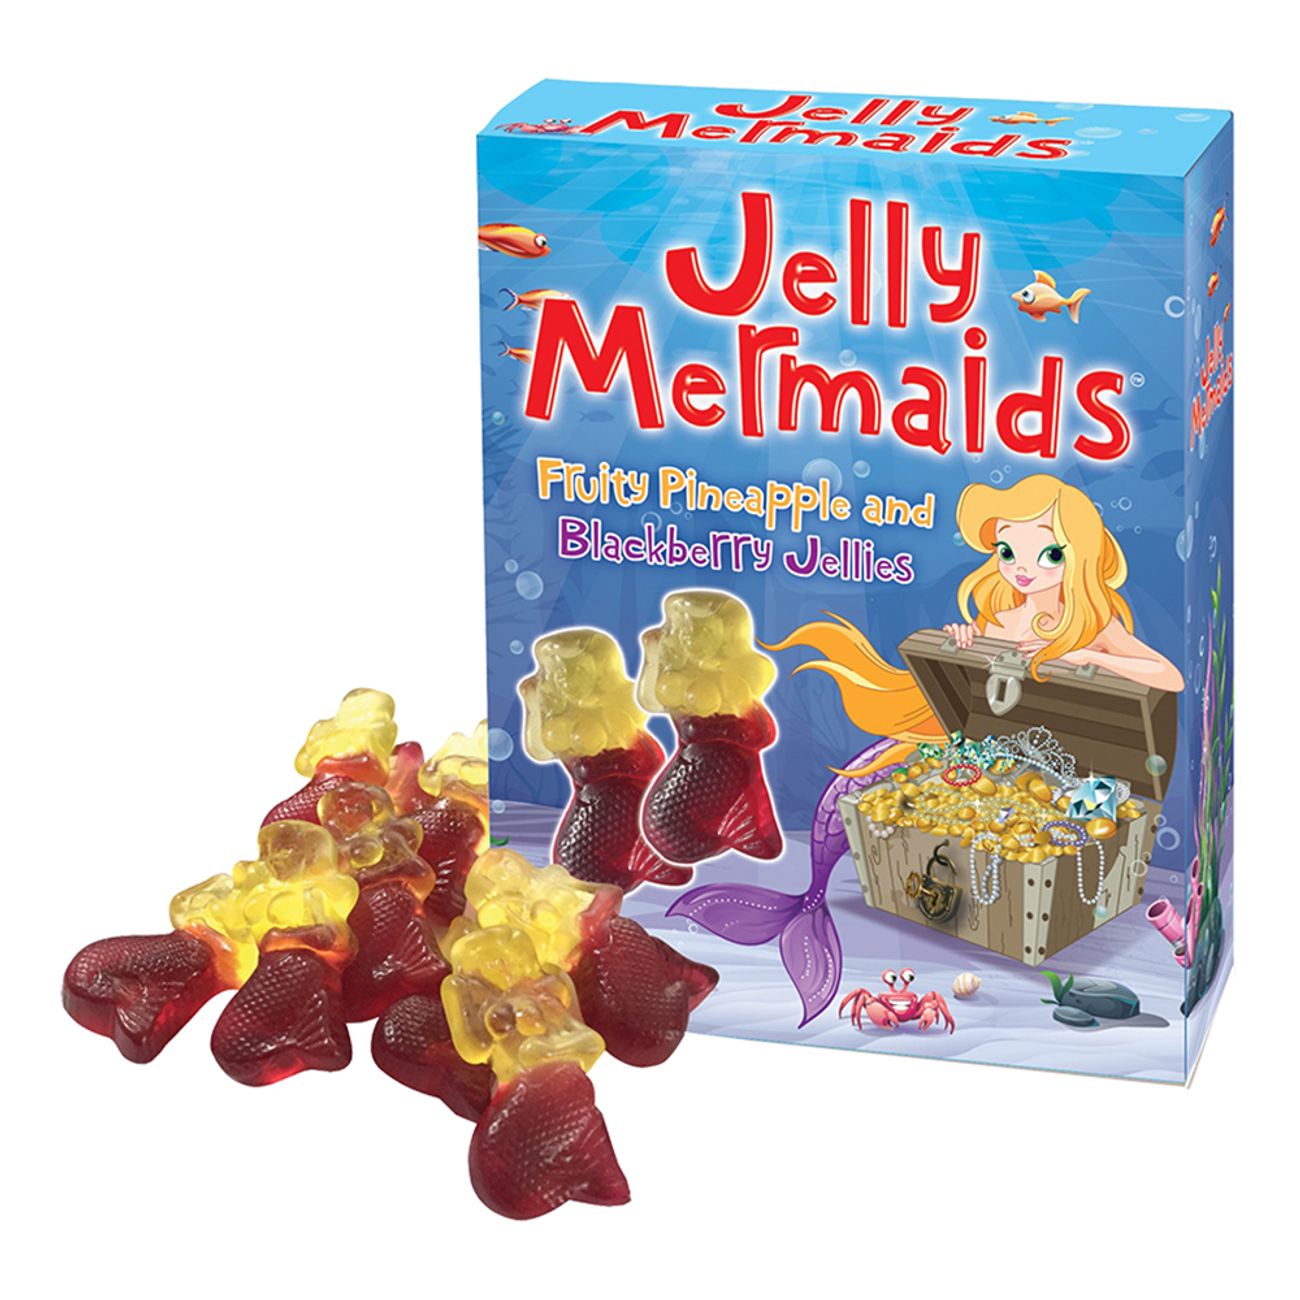 jelly-mermaids-1